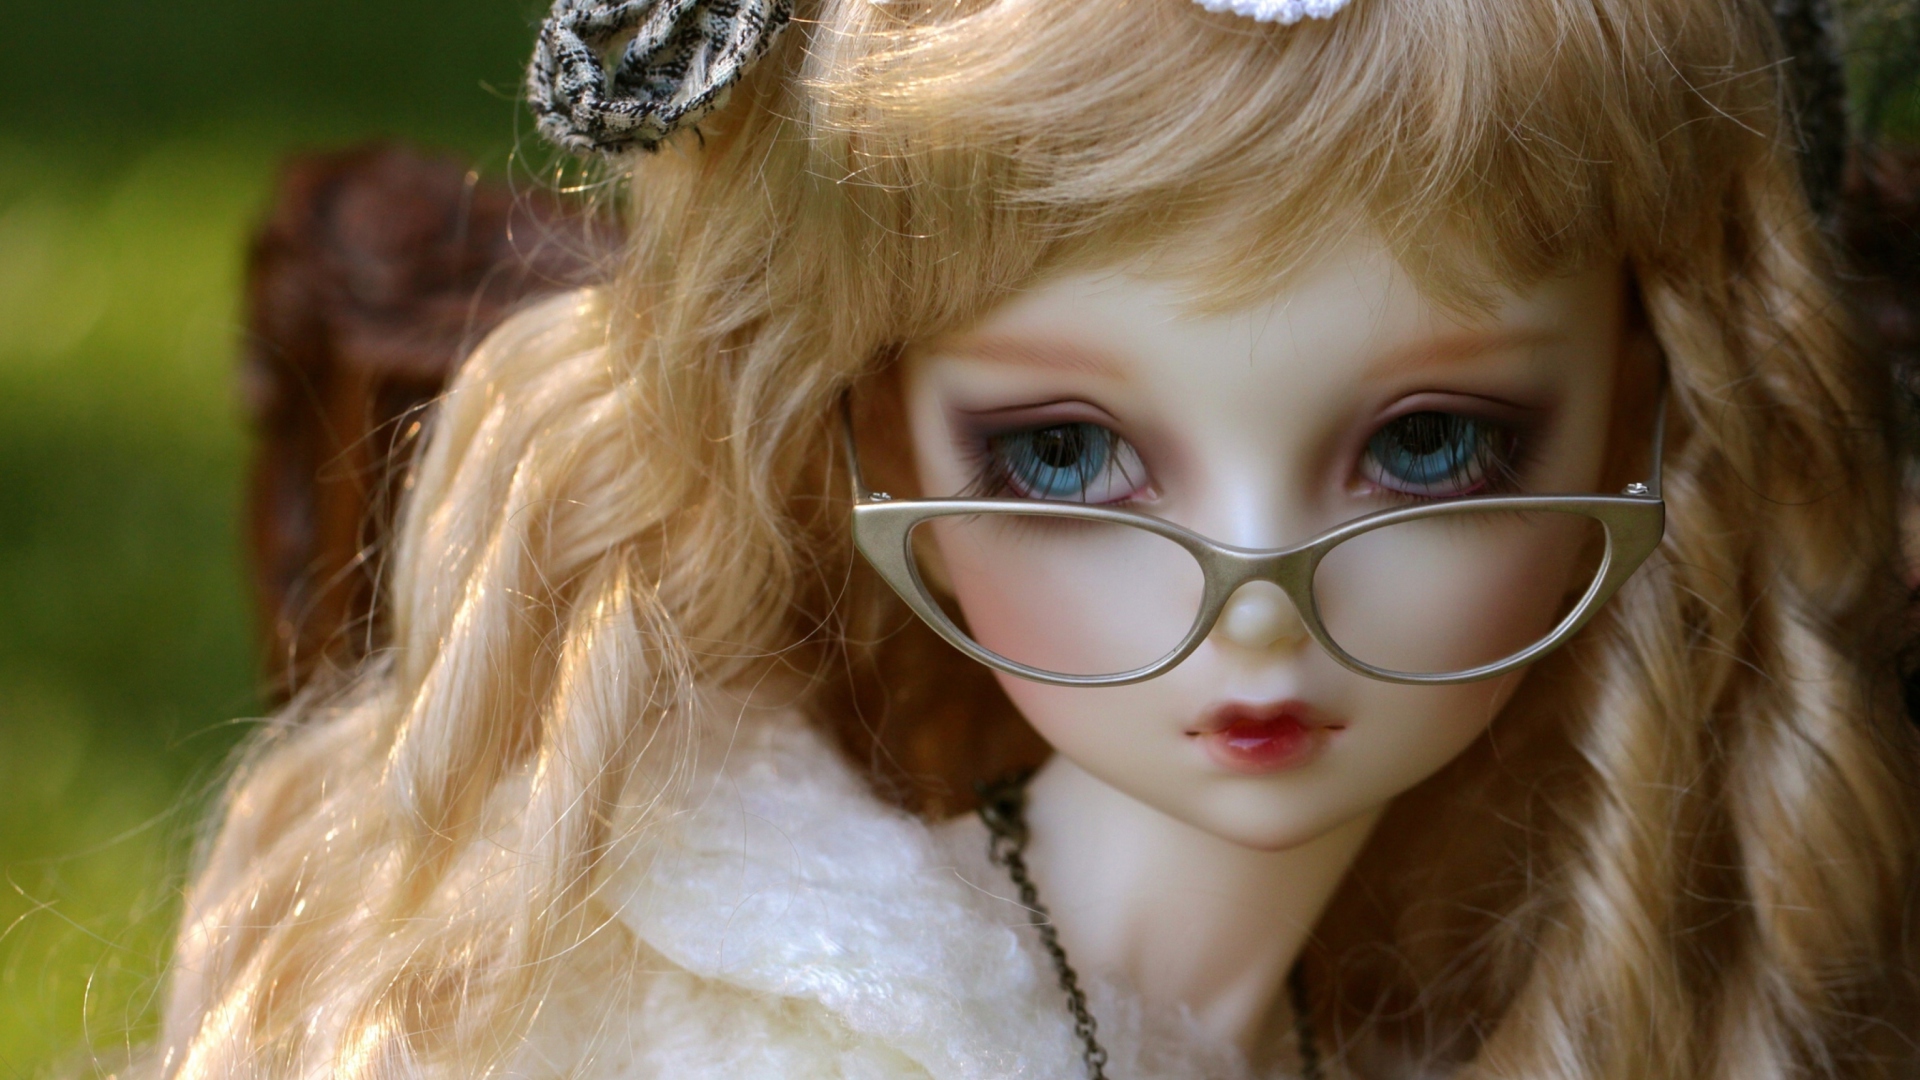 Doll In Glasses wallpaper 1920x1080